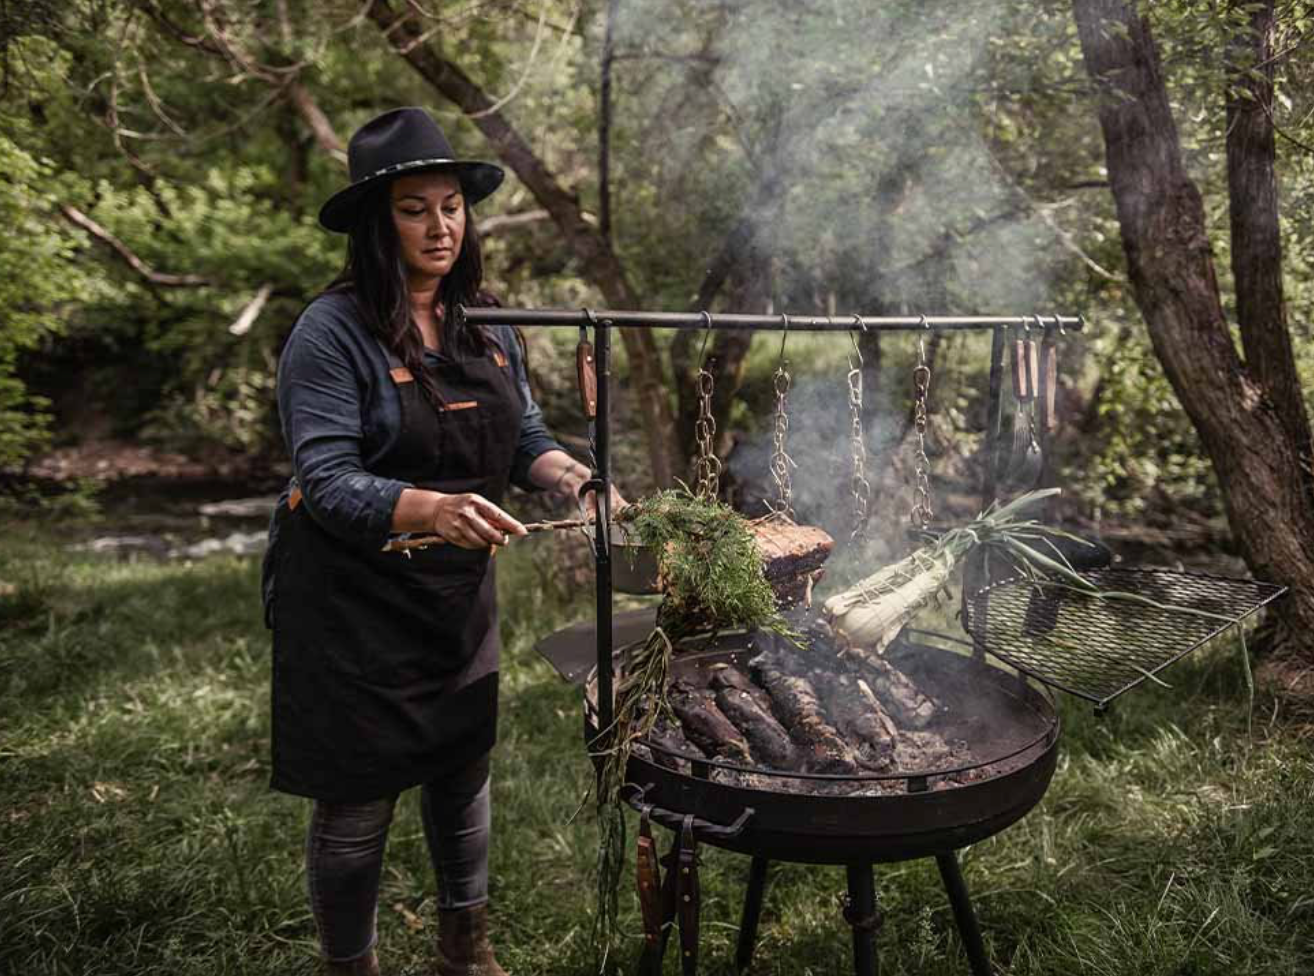 Brasero Barbecue Cowboy Fire Pit Grill 76 cm 30'' - Barebones Living